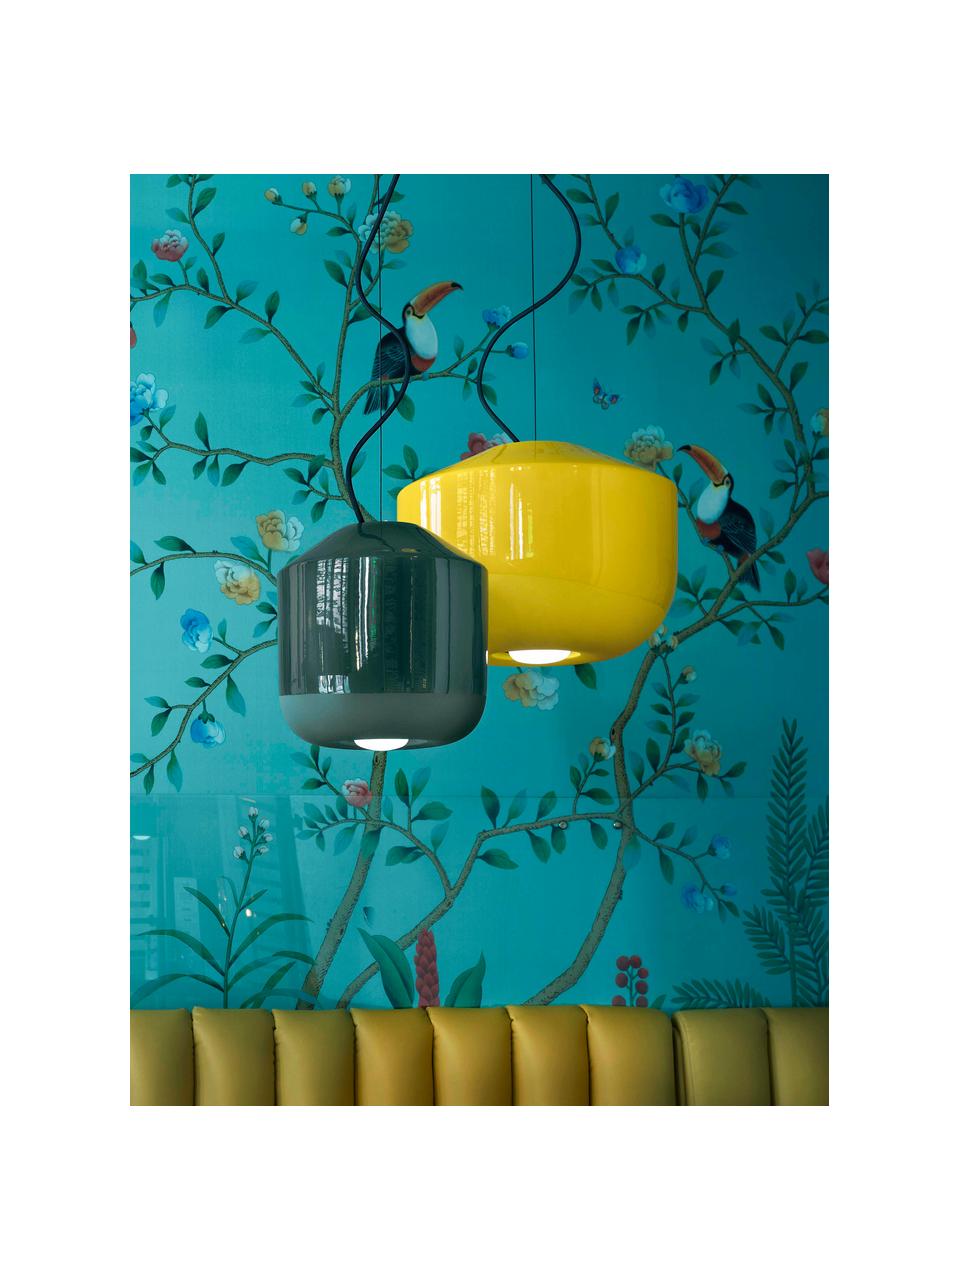 Lámpara de techo artesanal pequeña Bellota, Pantalla: cerámica, Anclaje: aluminio con pintura en p, Cable: cubierto en tela, Verde oscuro, Ø 24 x Al 25 cm